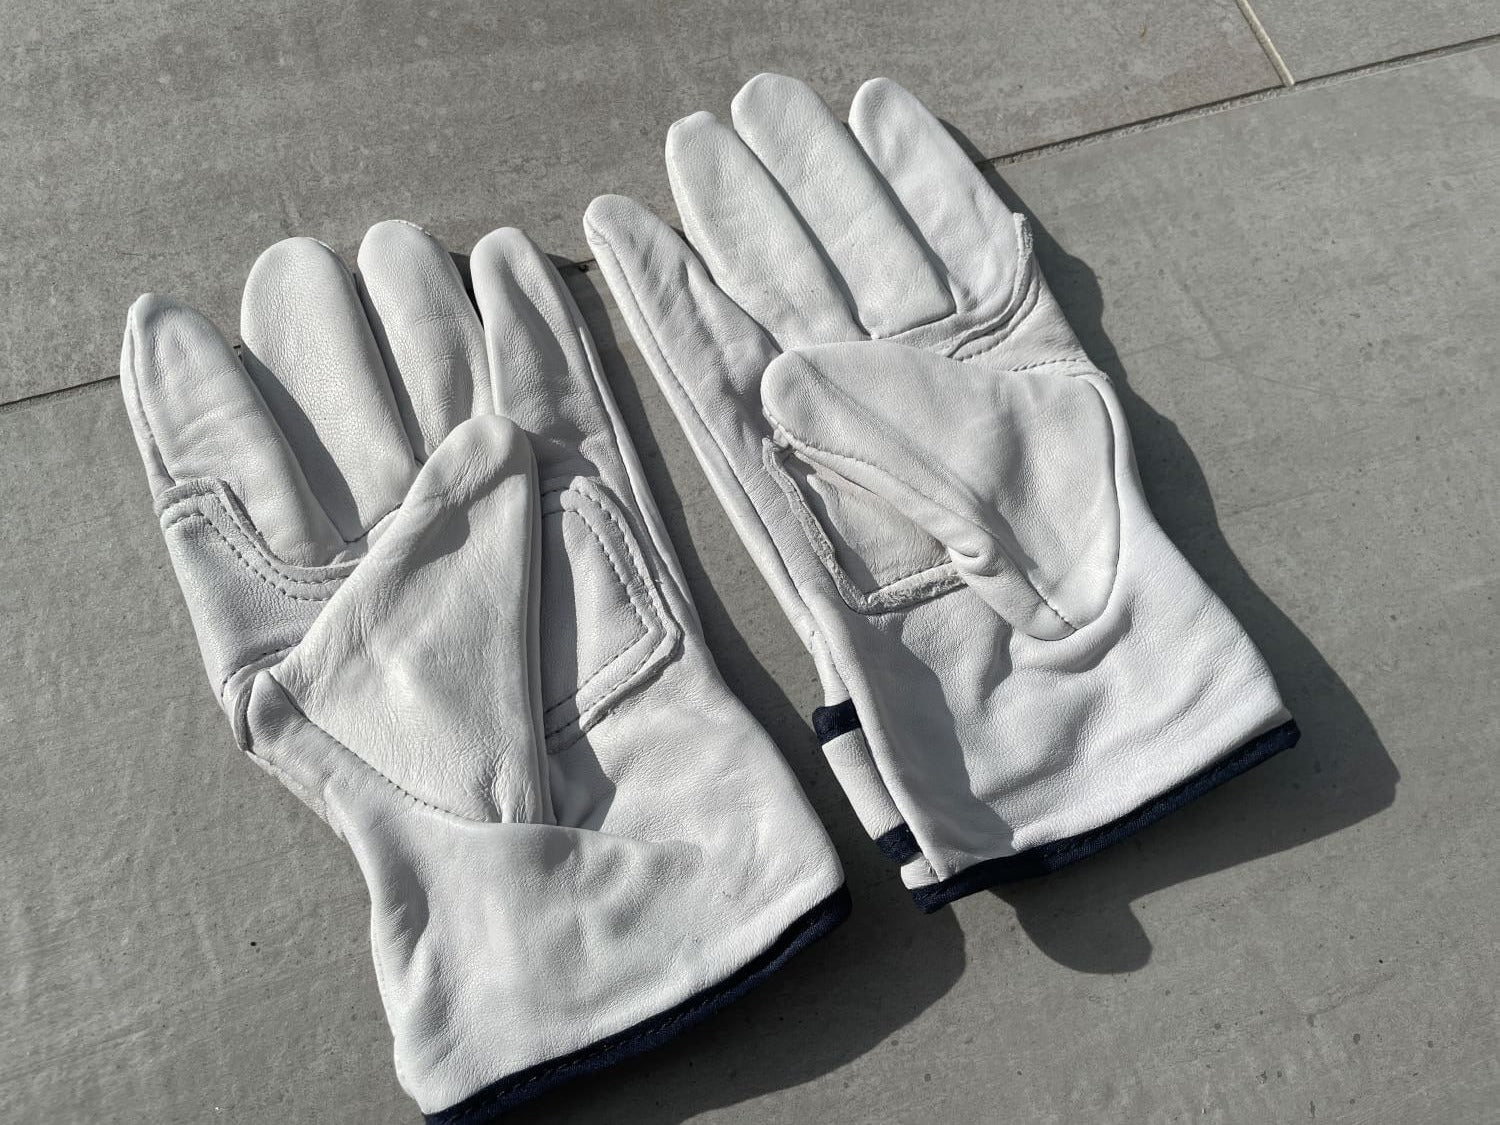 Sheepskin Leather Work Gloves - Soft, Heavy Duty